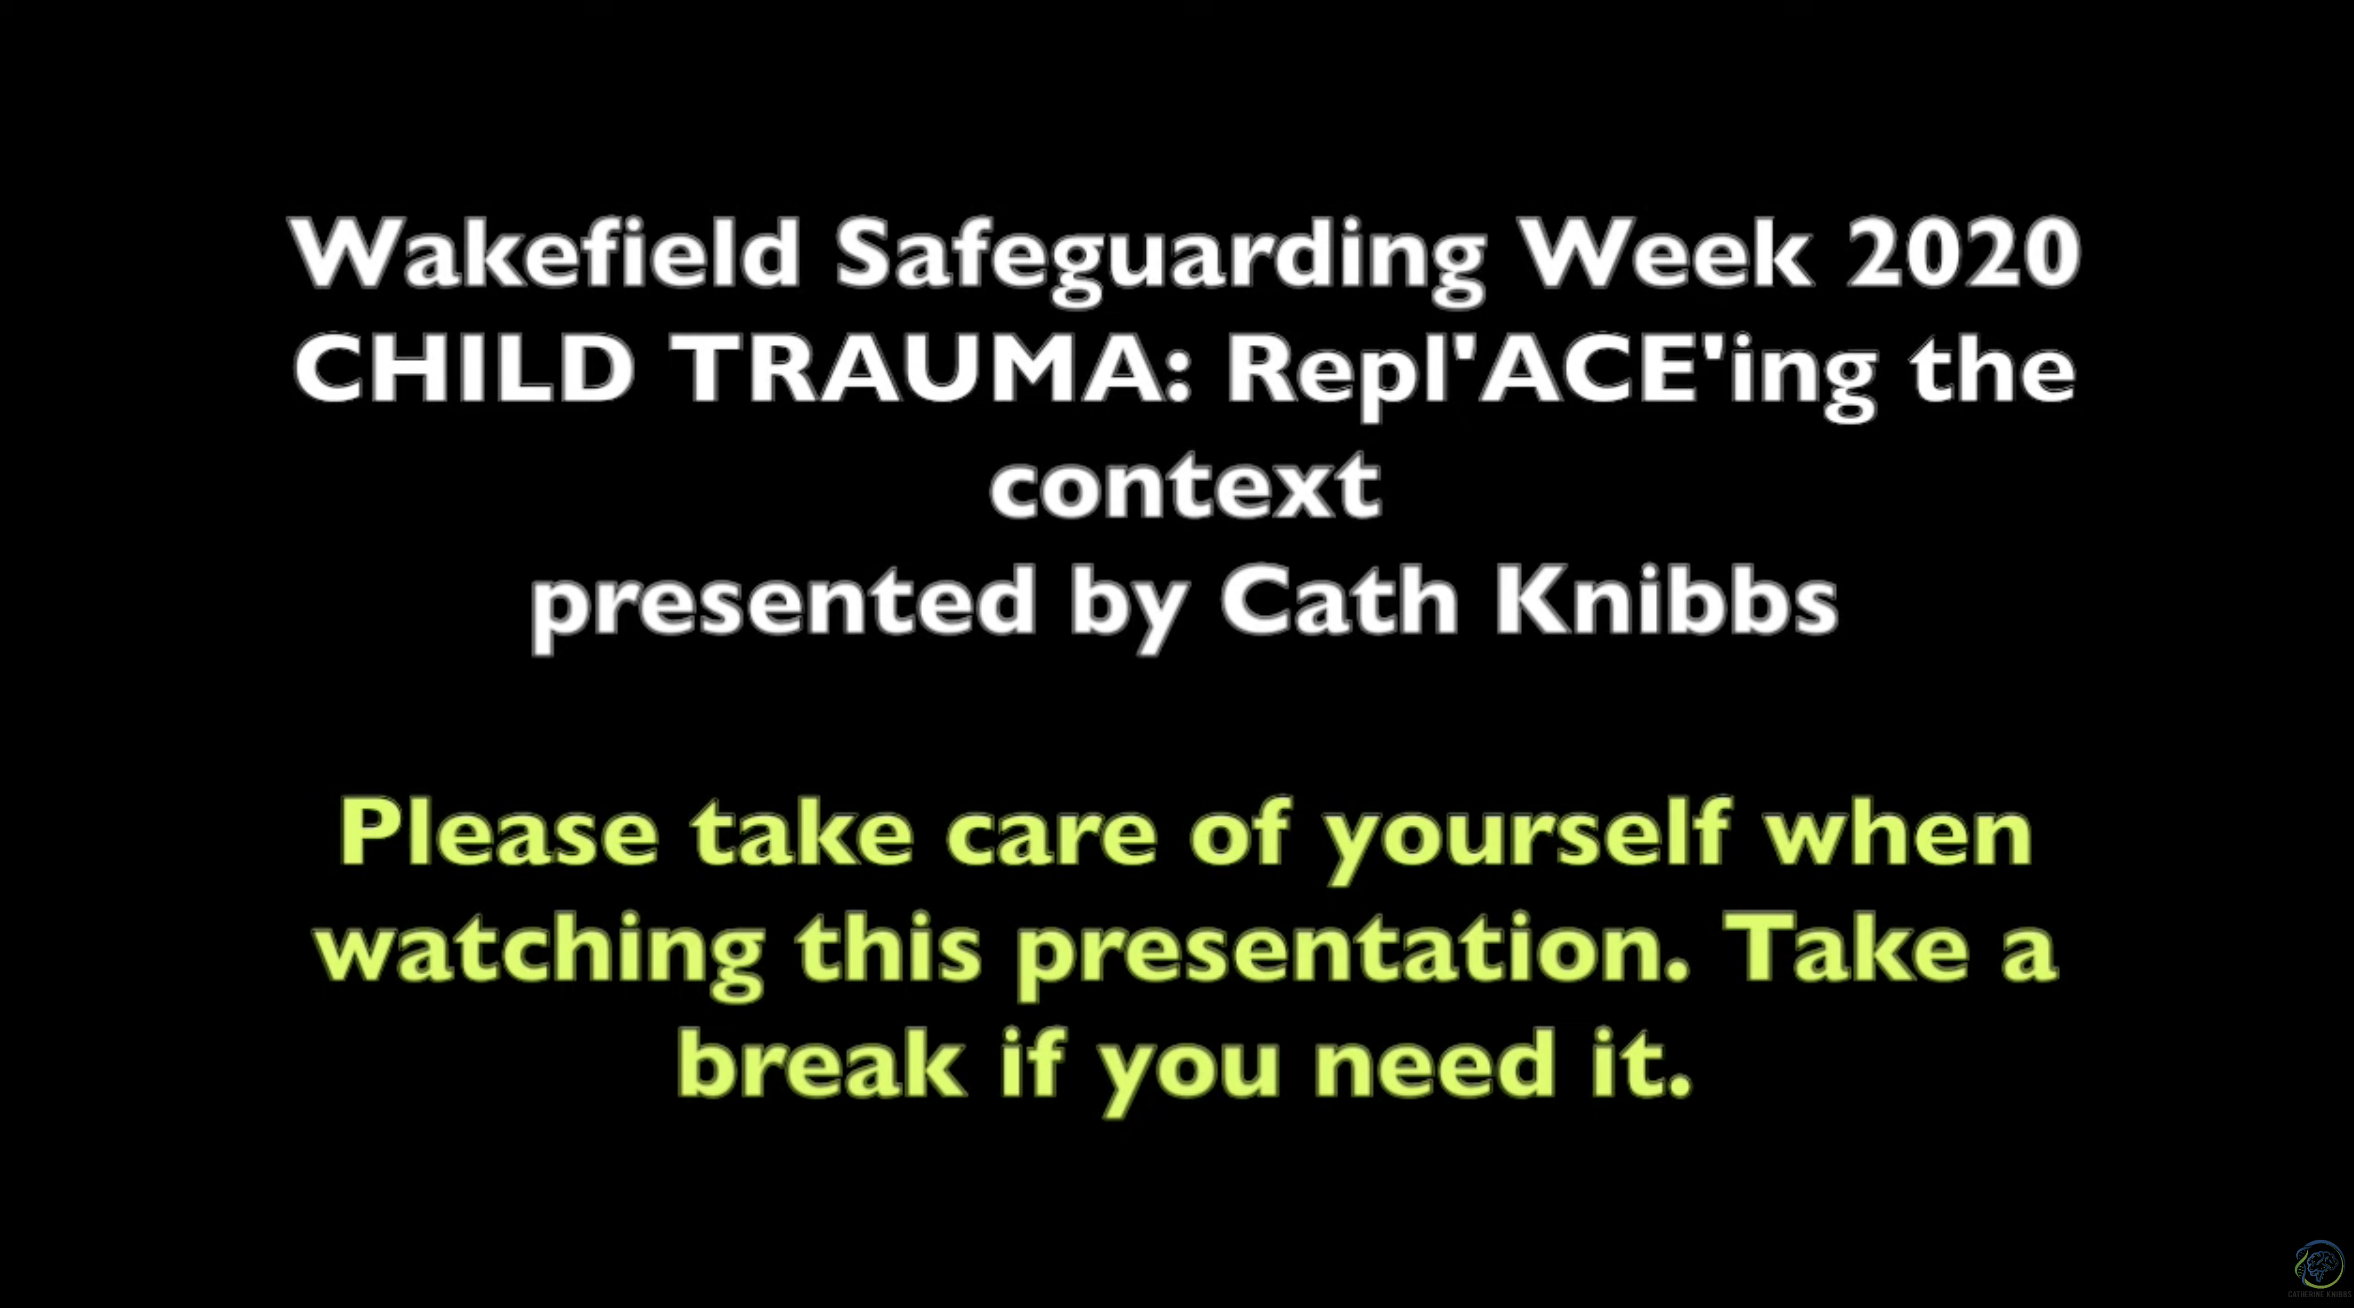 Child trauma presentation video